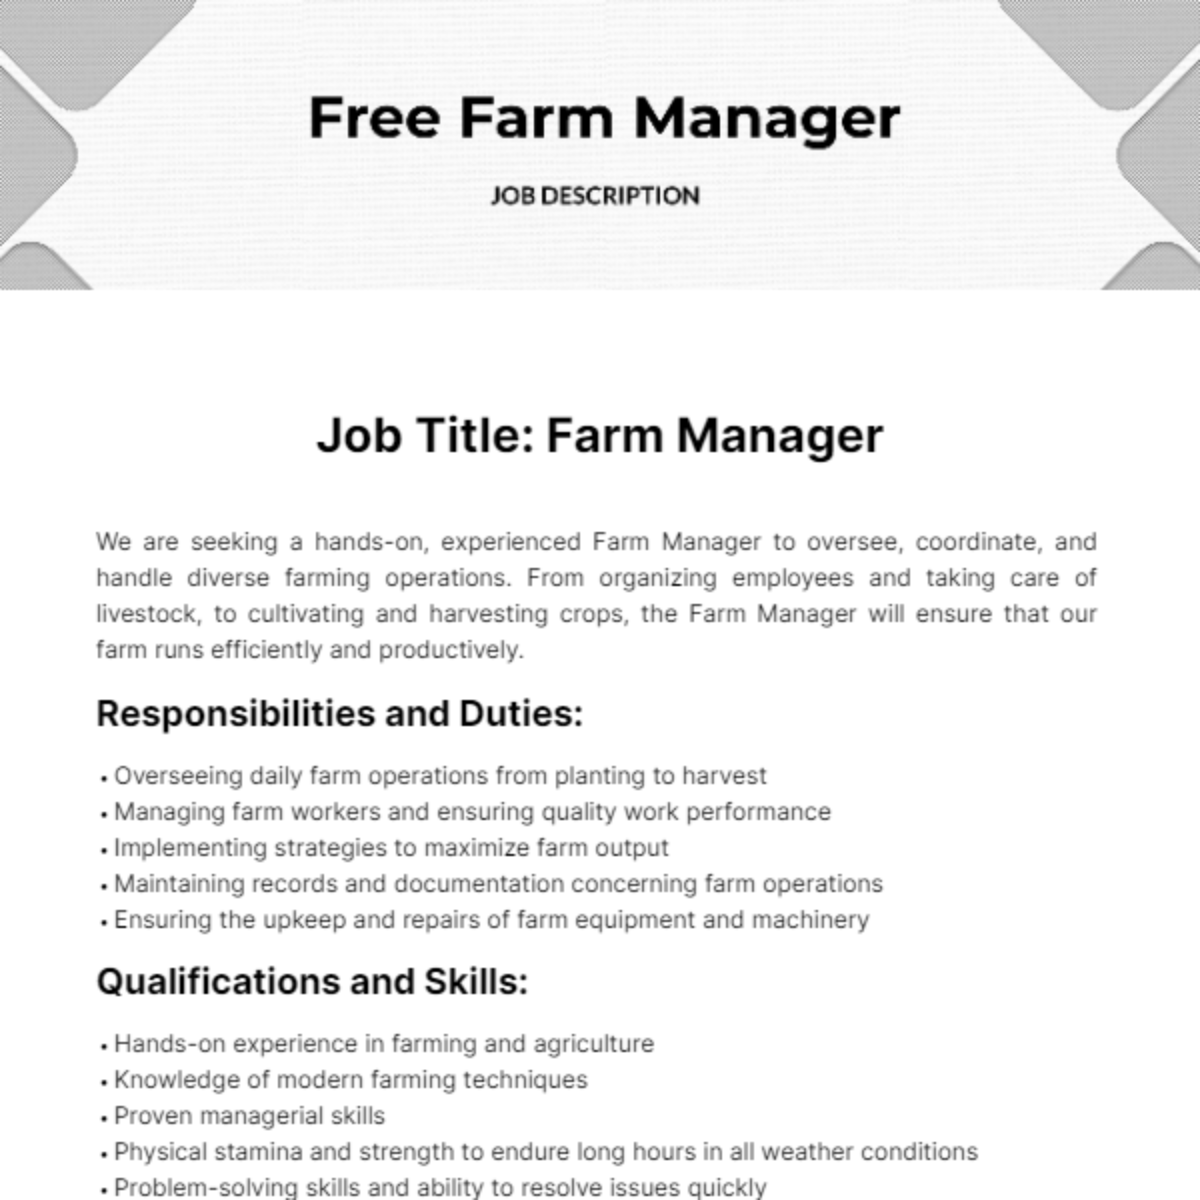 Free Farm Manager Job Description Template